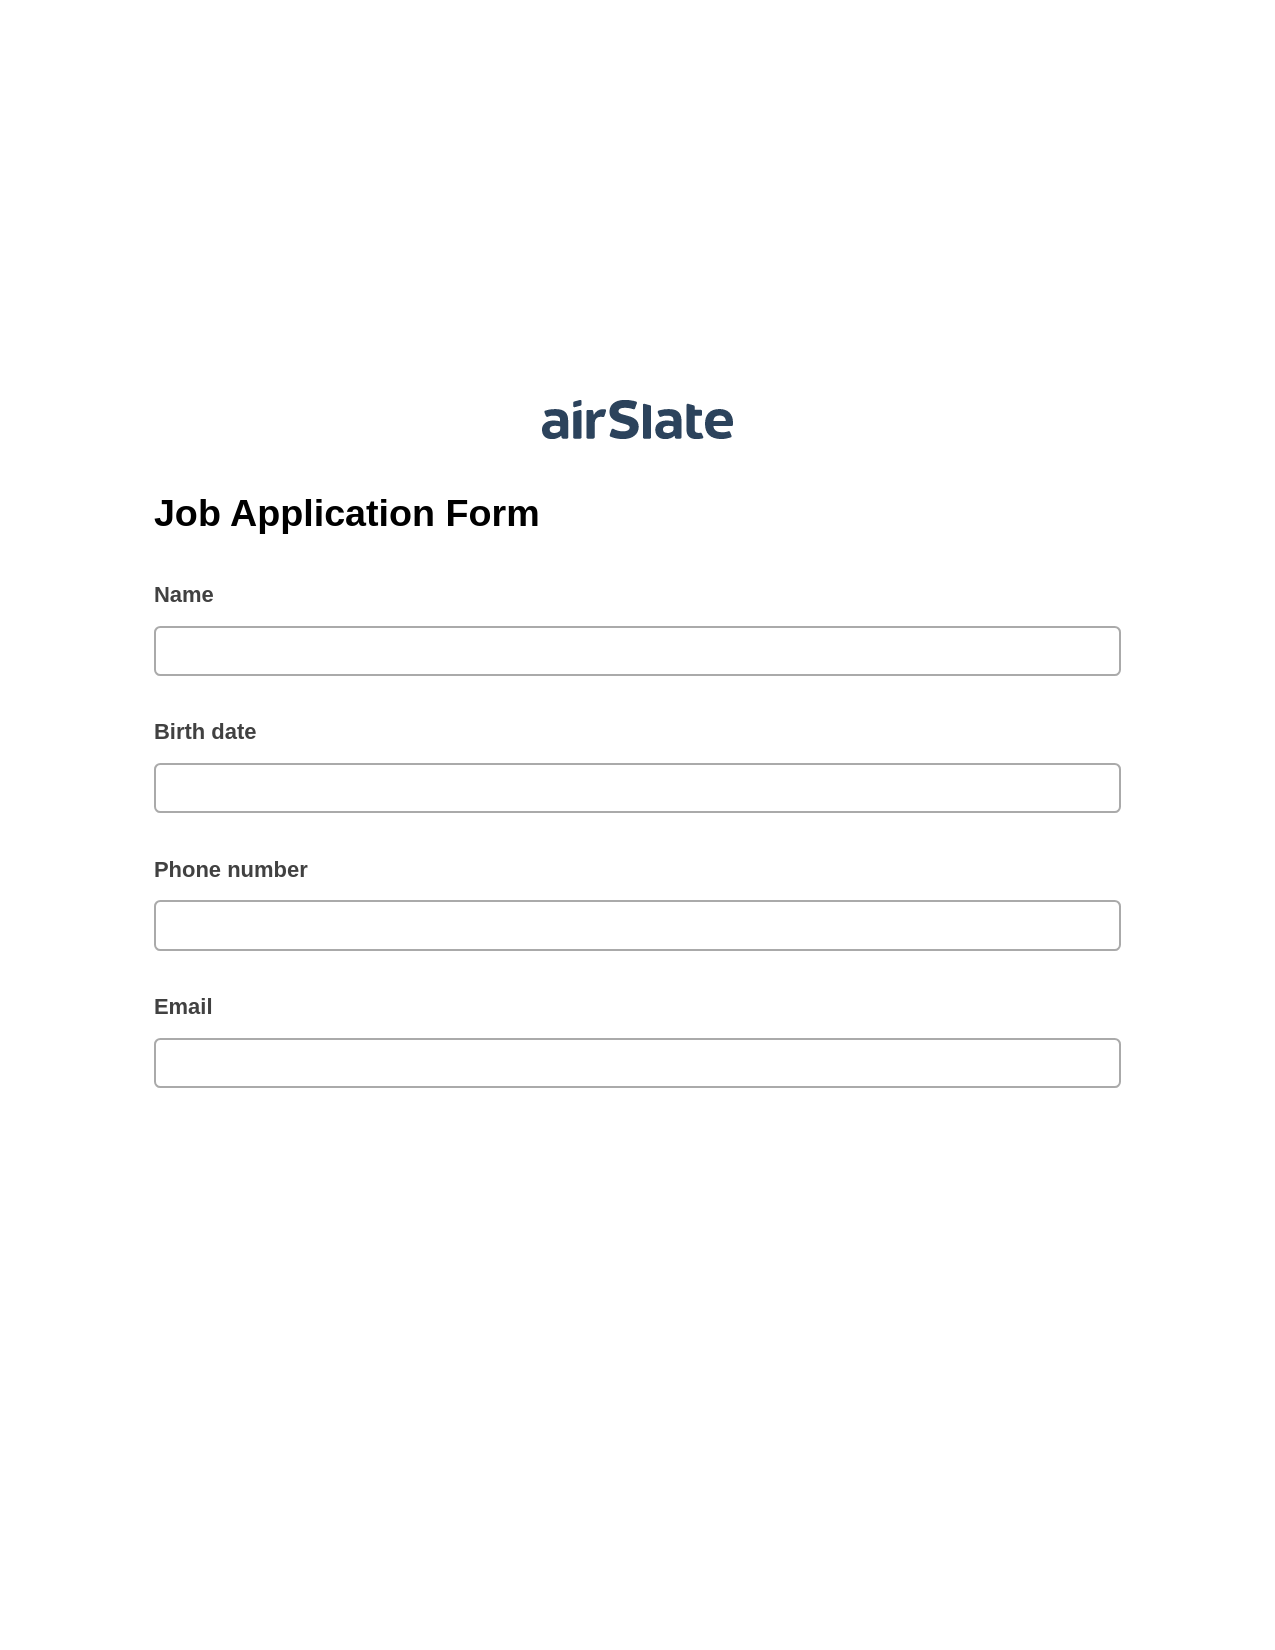 Multirole Job Application Form Pre-fill from Google Sheet Dropdown Options Bot, Create Salesforce Record Bot, Box Bot